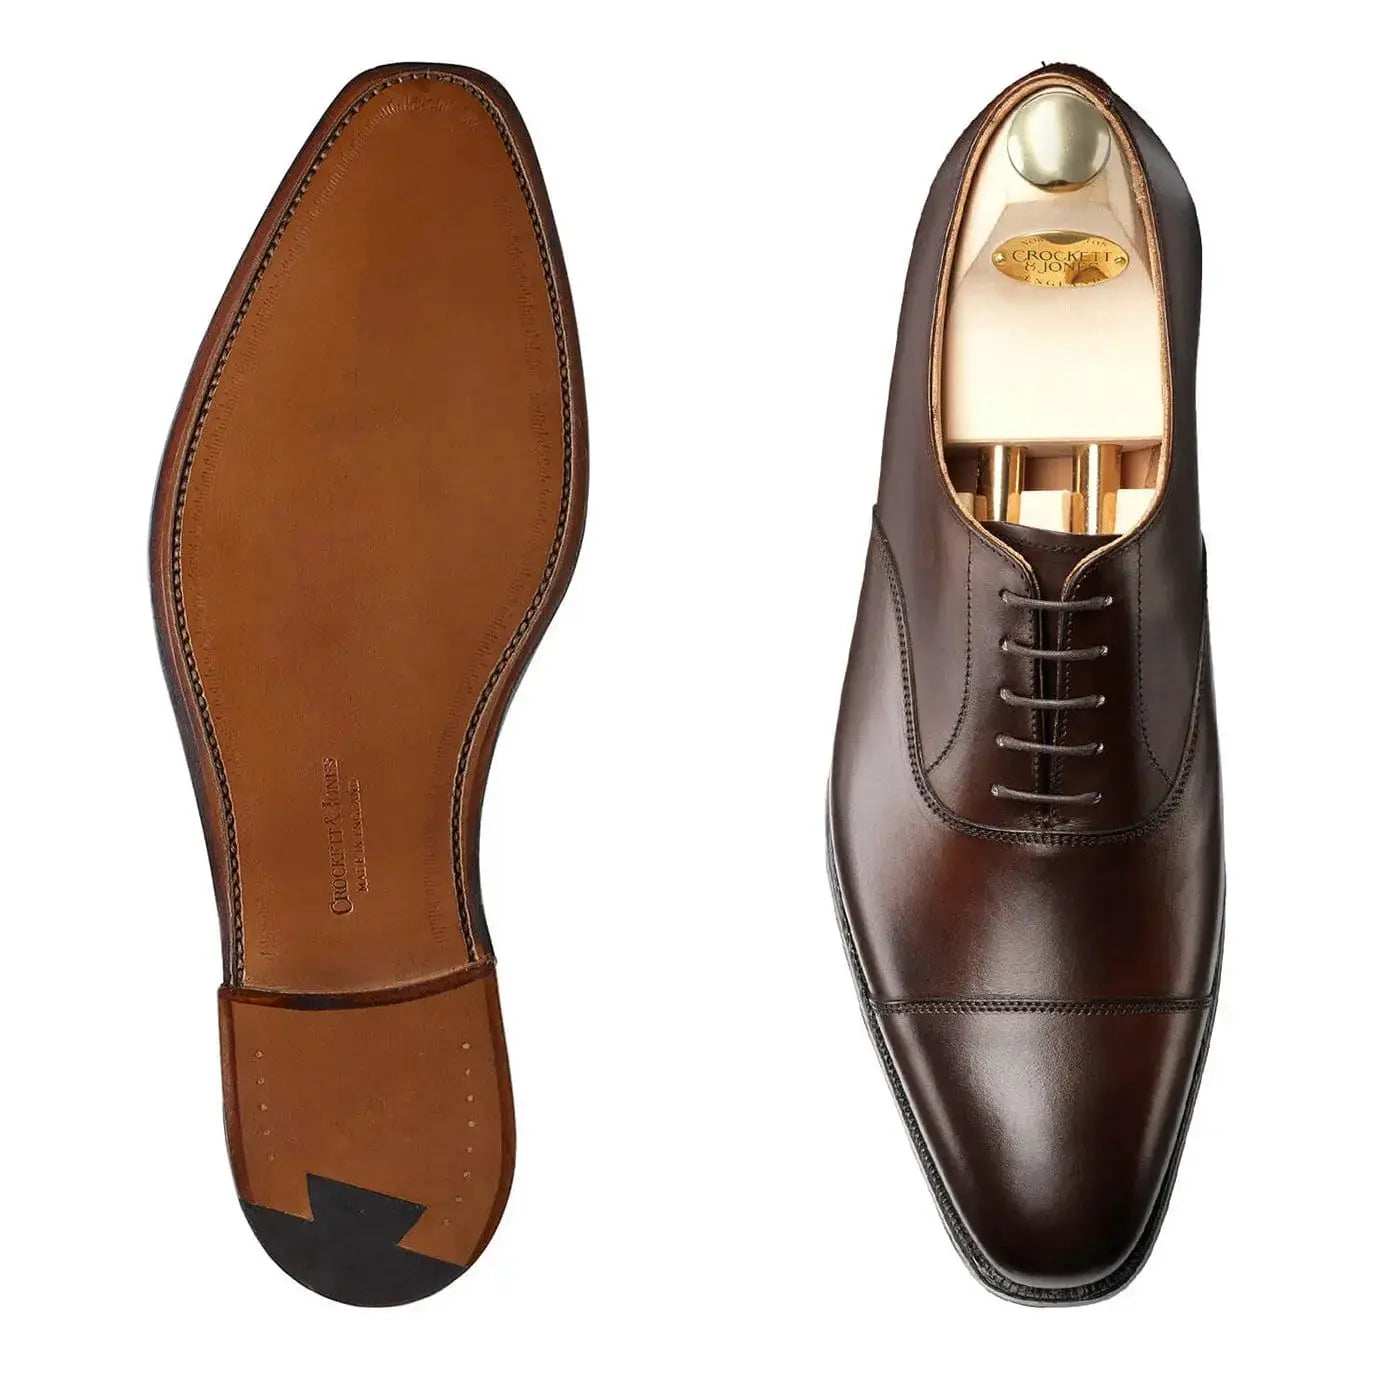 Hallam Brown Dark Calf Oxford Shoes - E Fitting  Crockett & Jones   